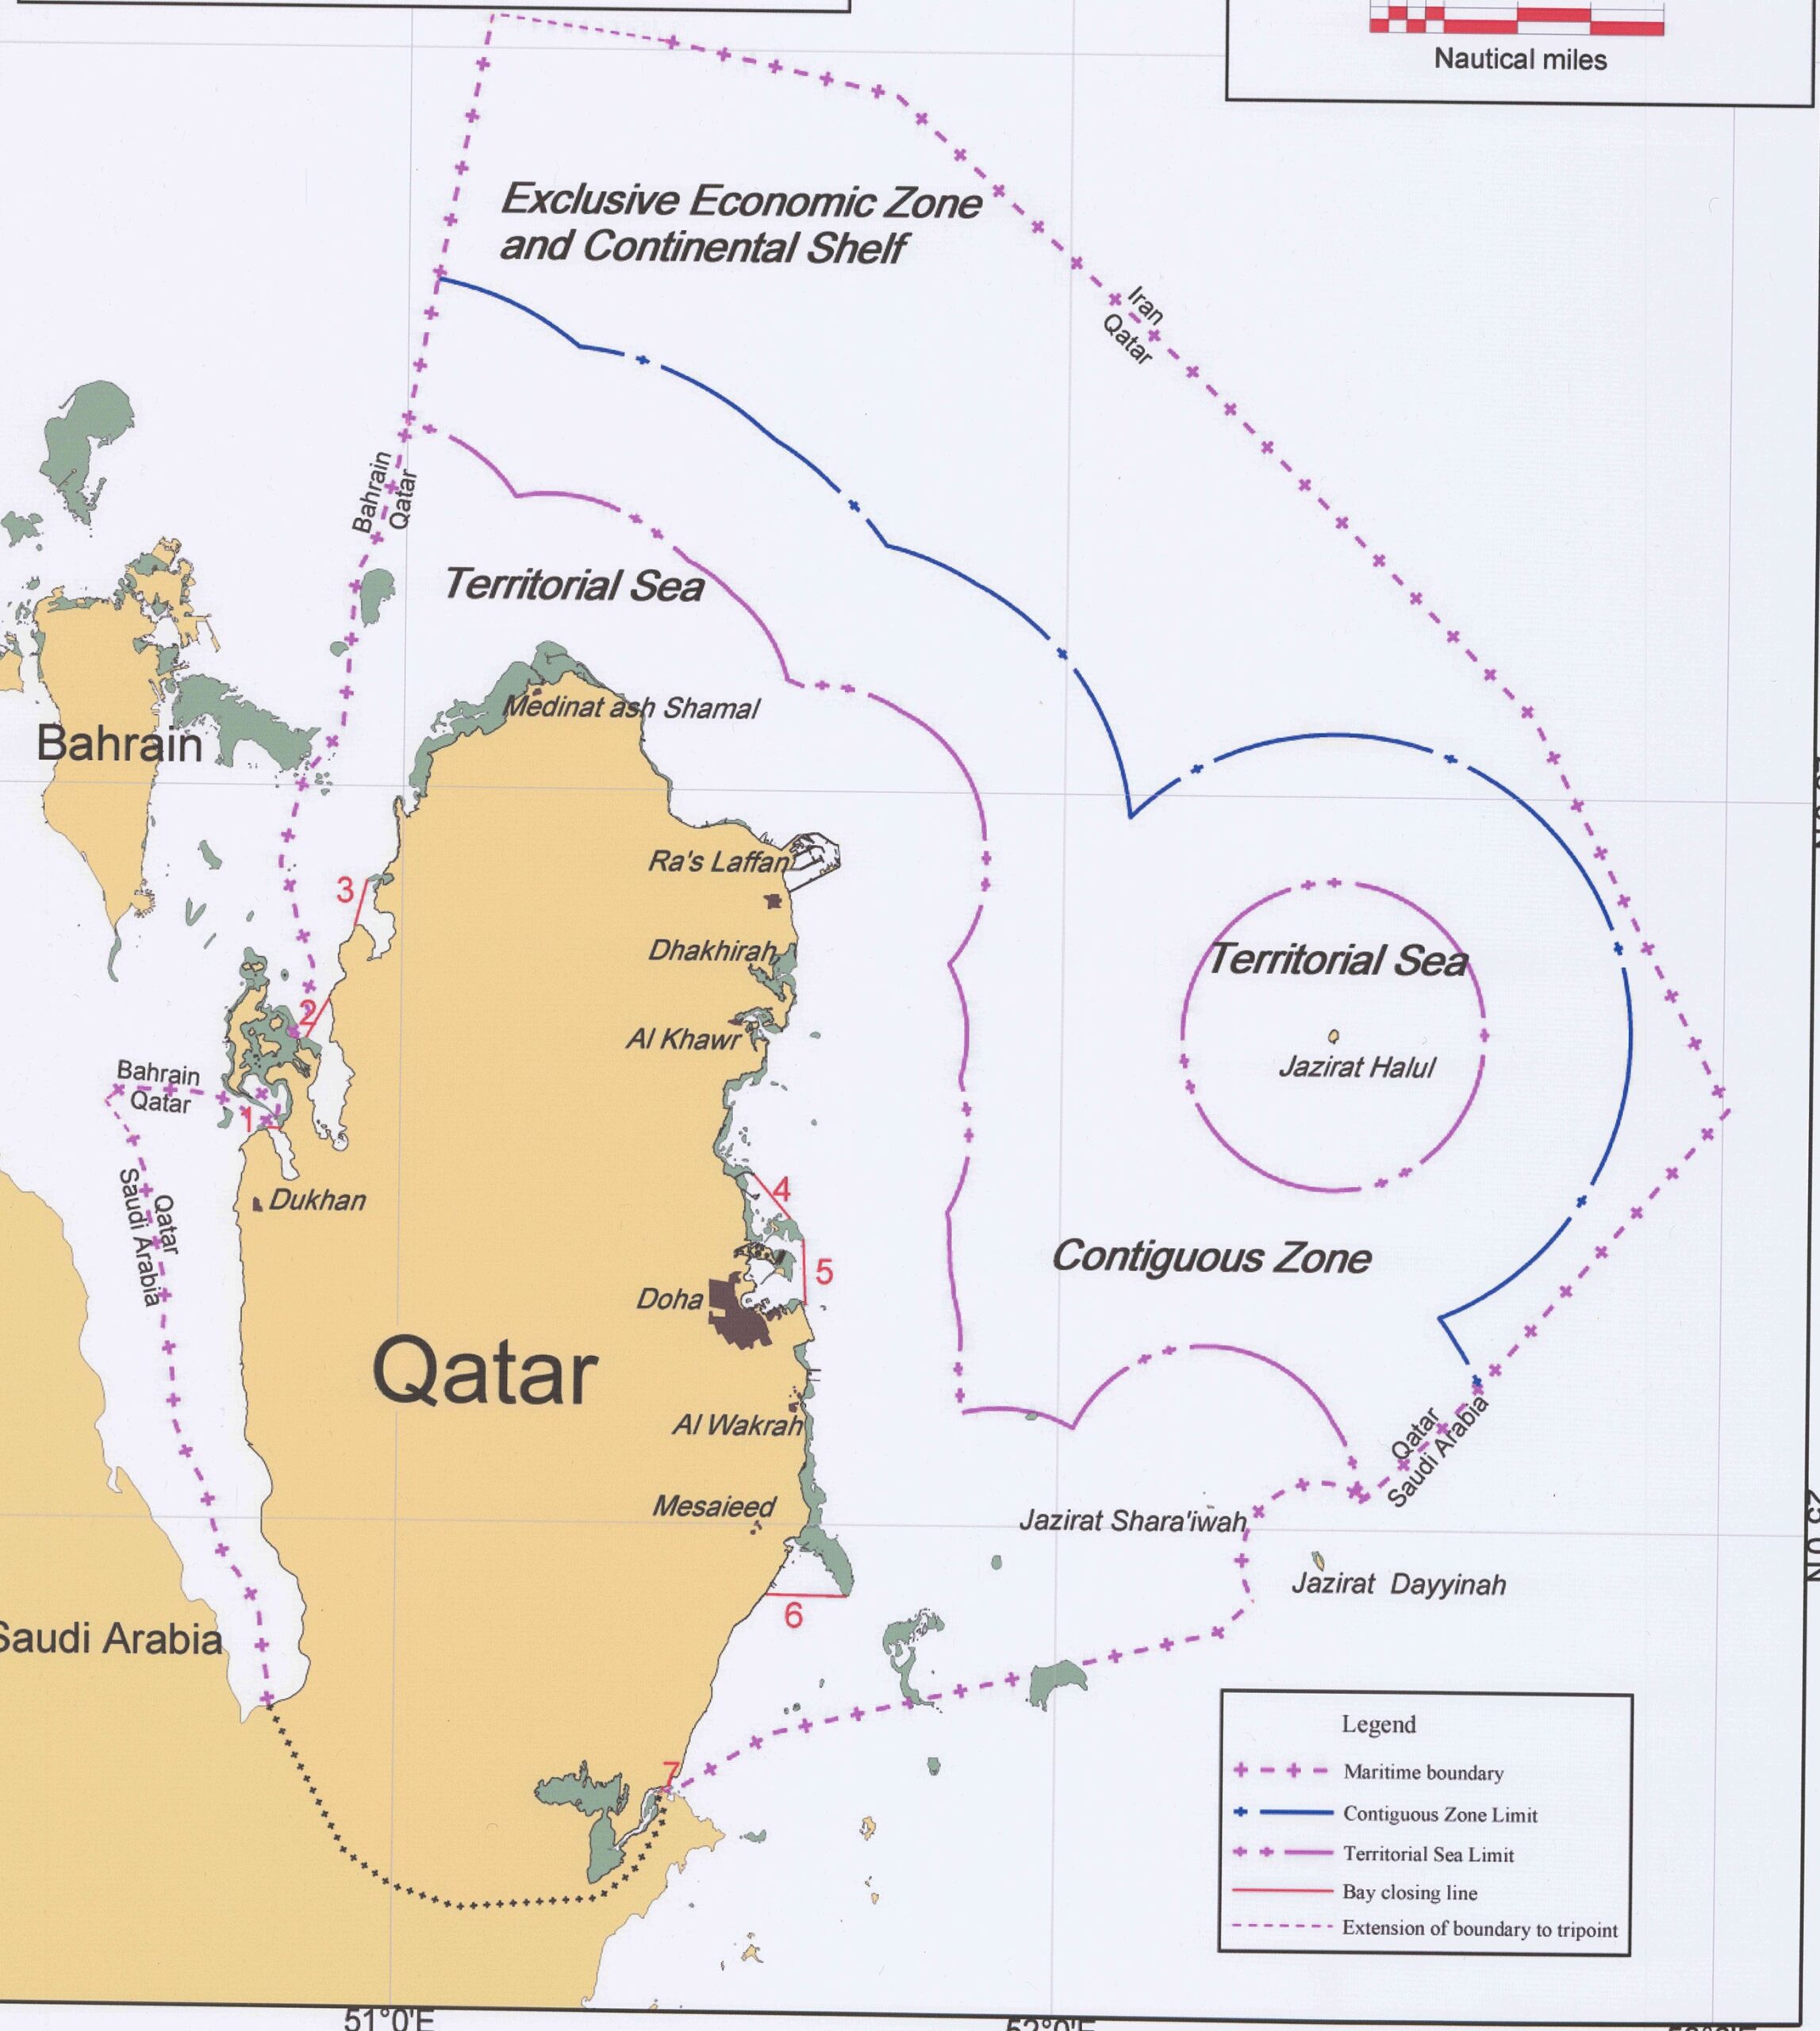 Qatar maritime claim about bay closing lines